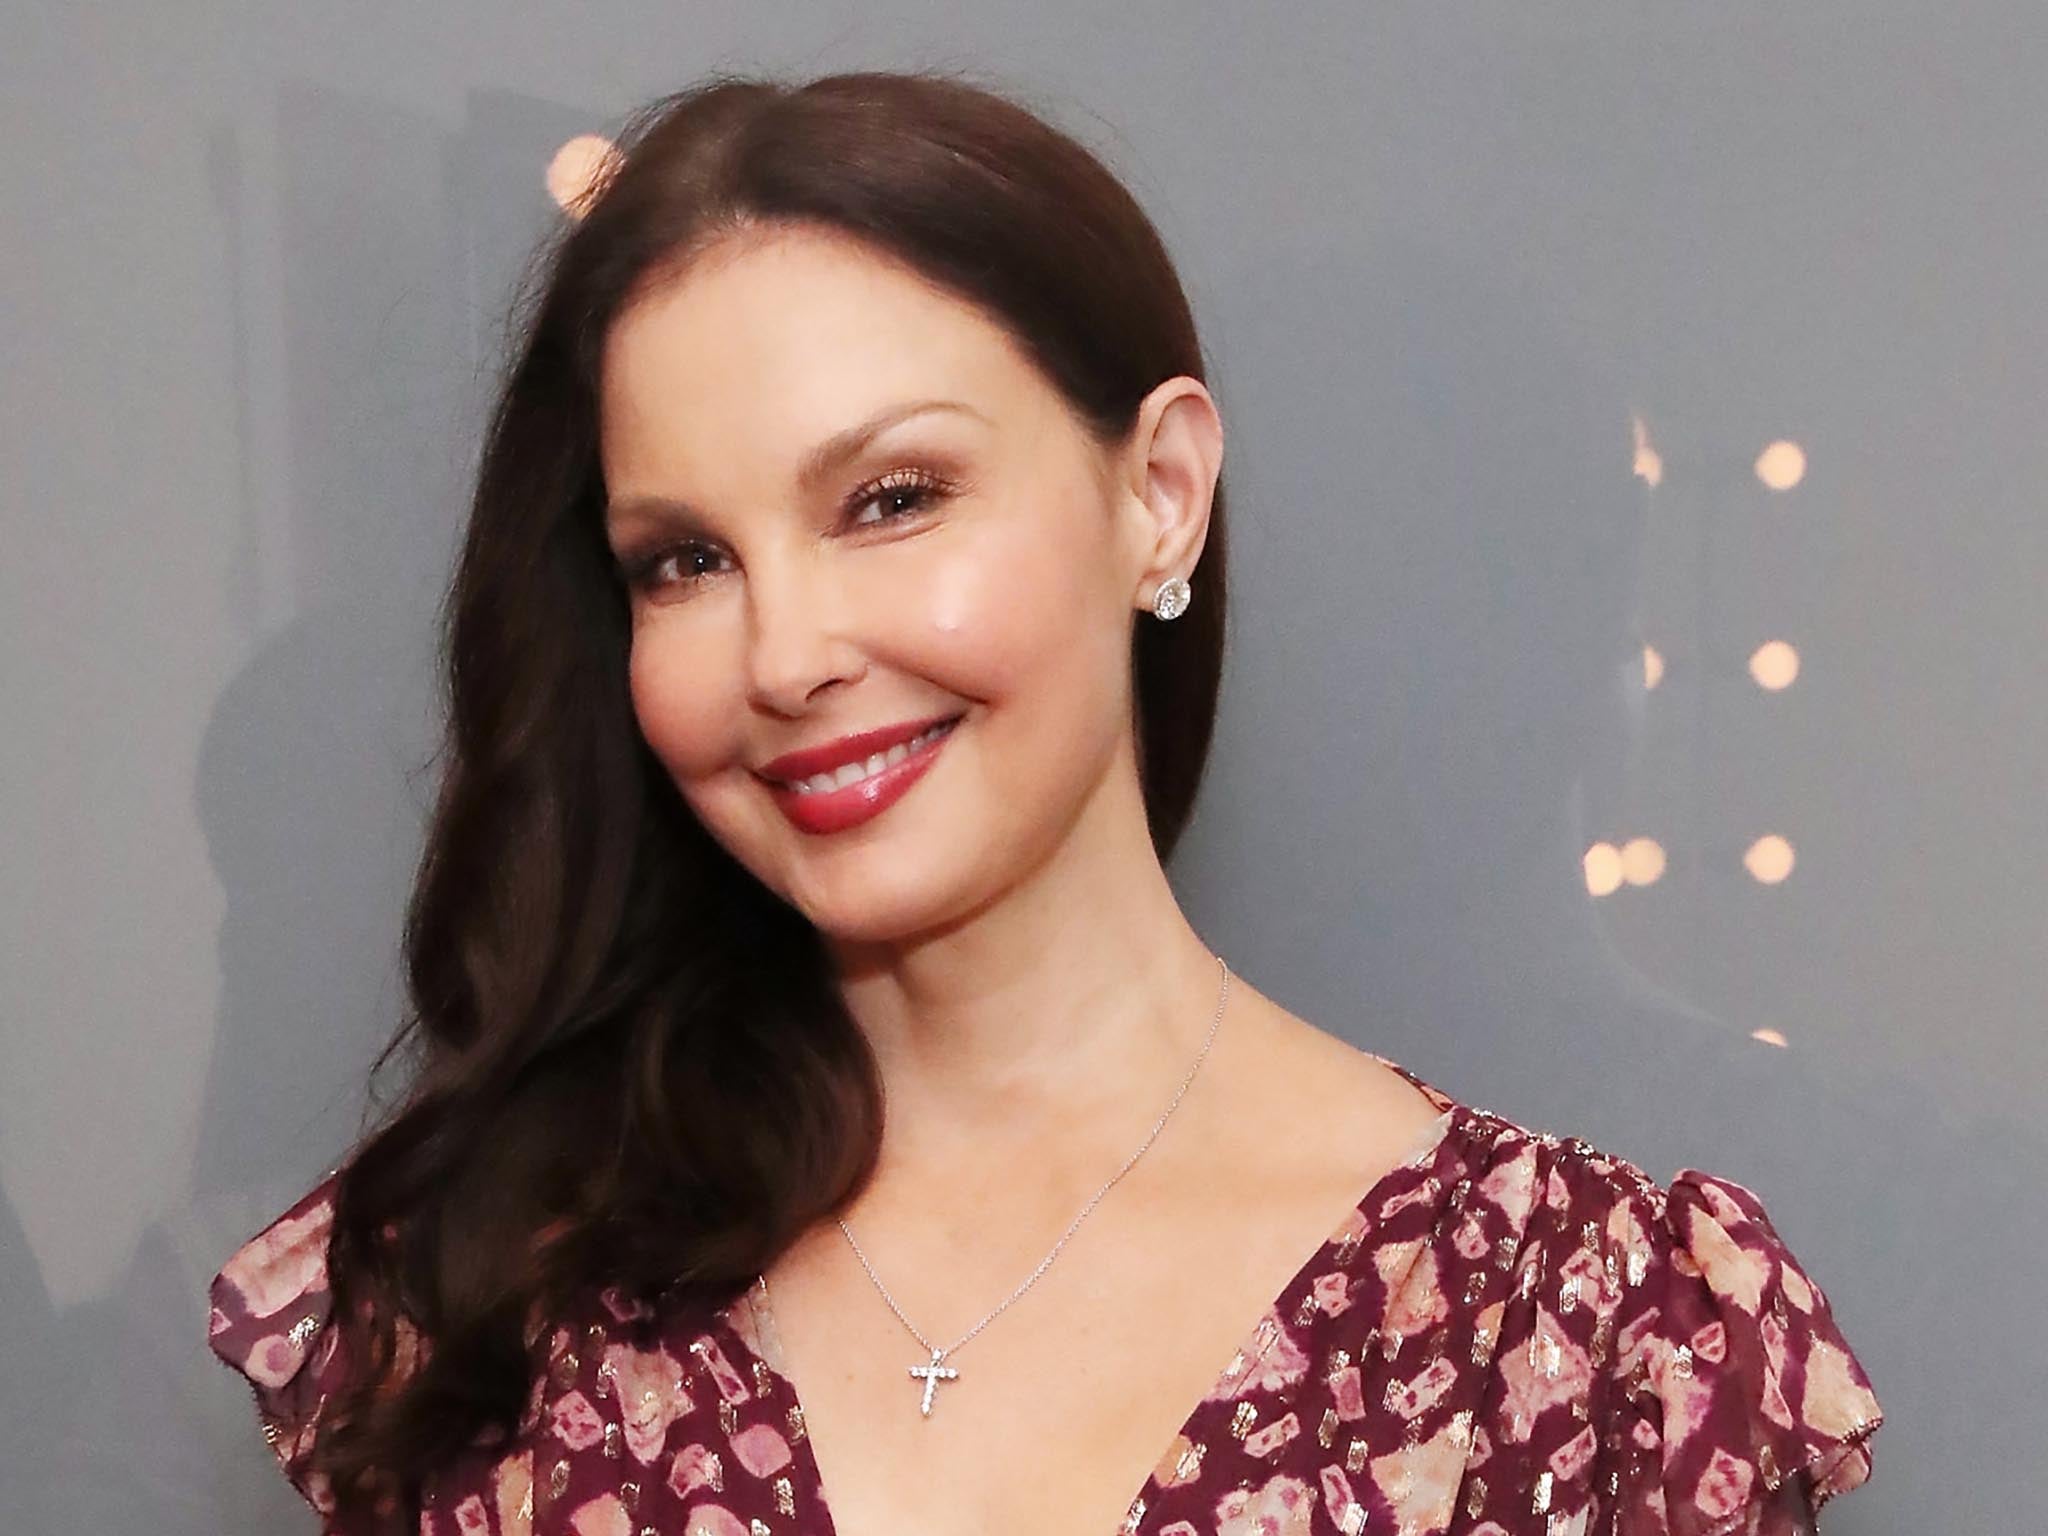 Actor Ashley Judd in 2018